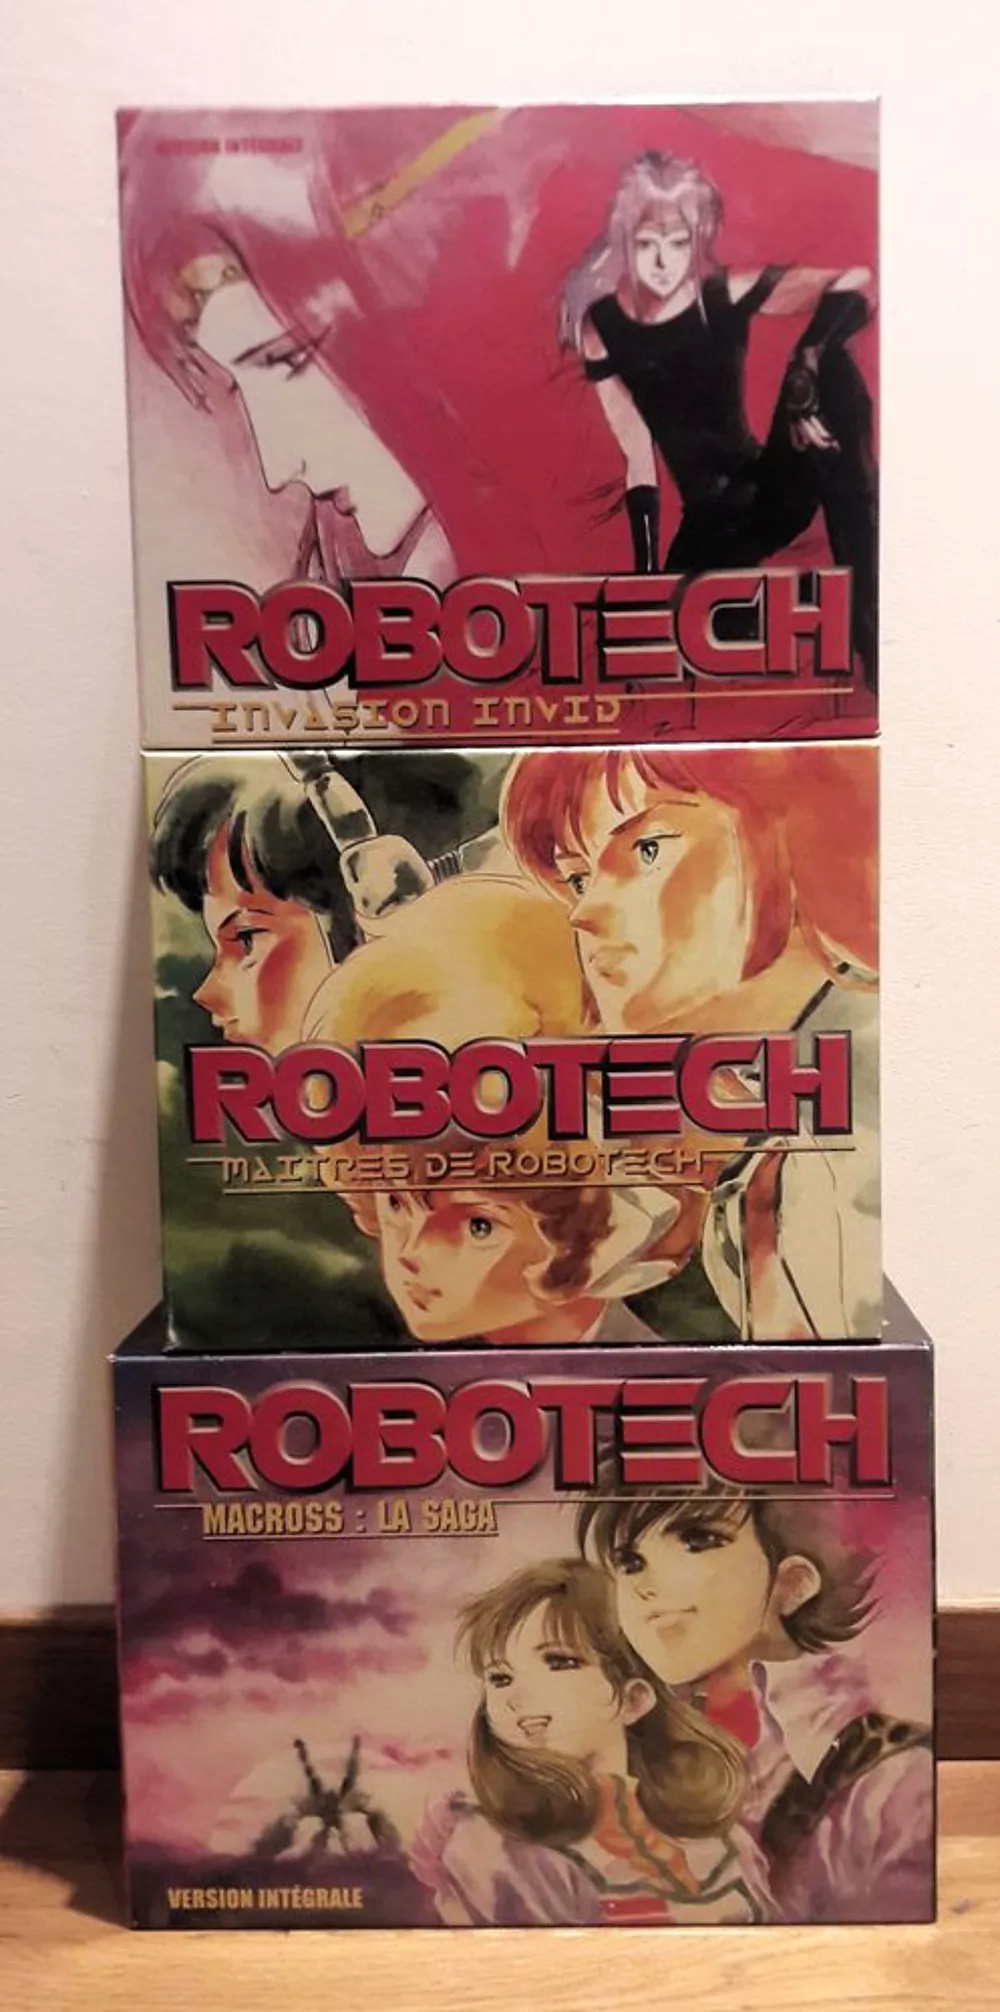 Robotech 1_webp10